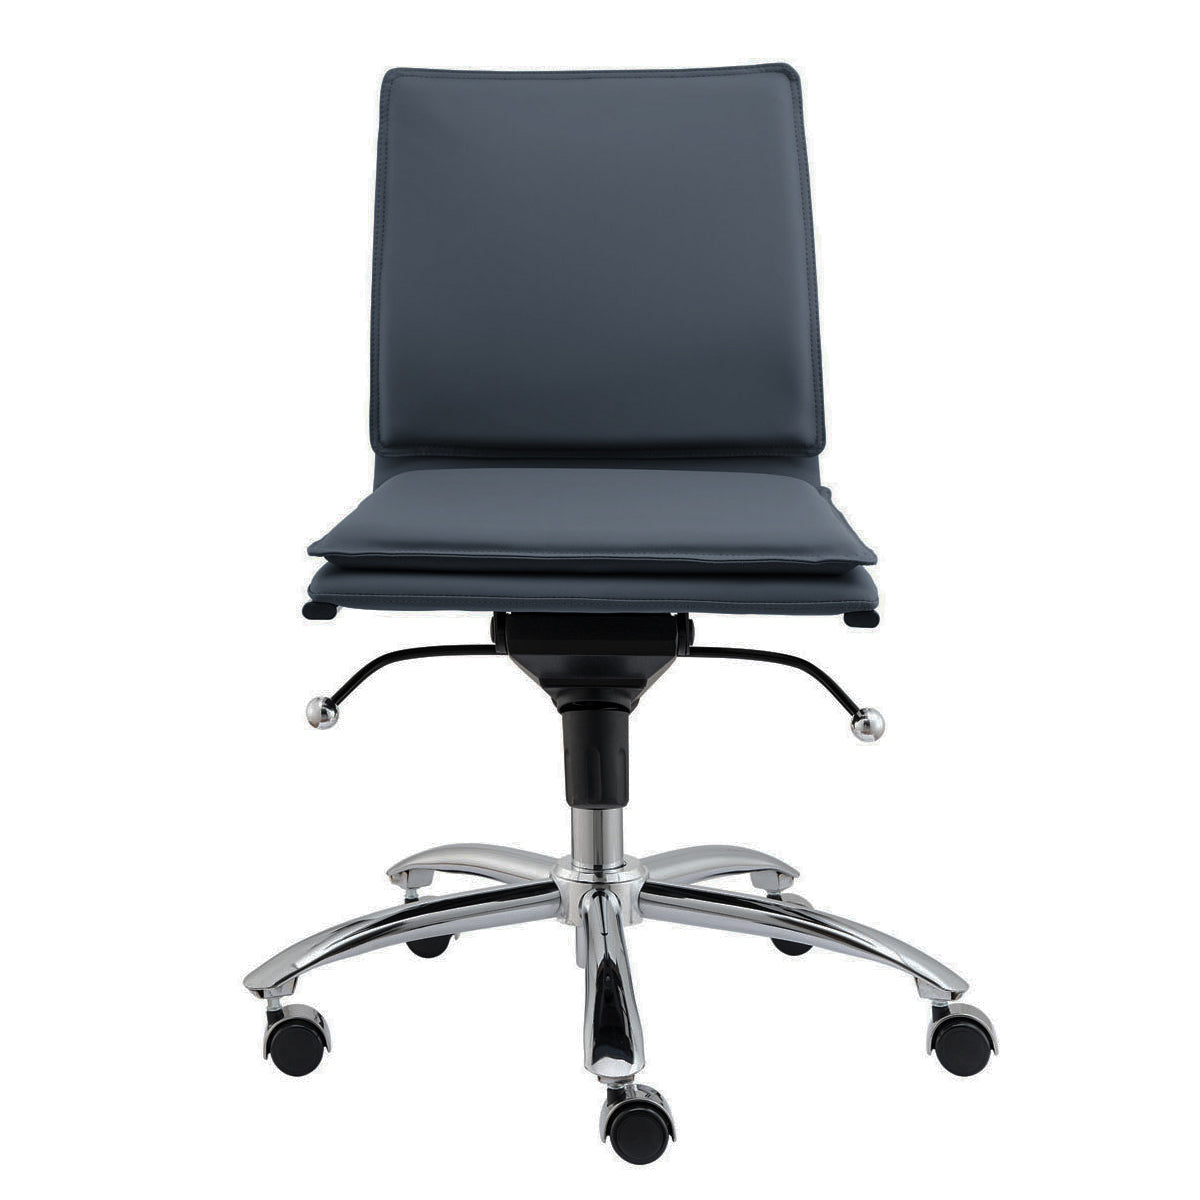 Gunar Pro Armless Office Chair